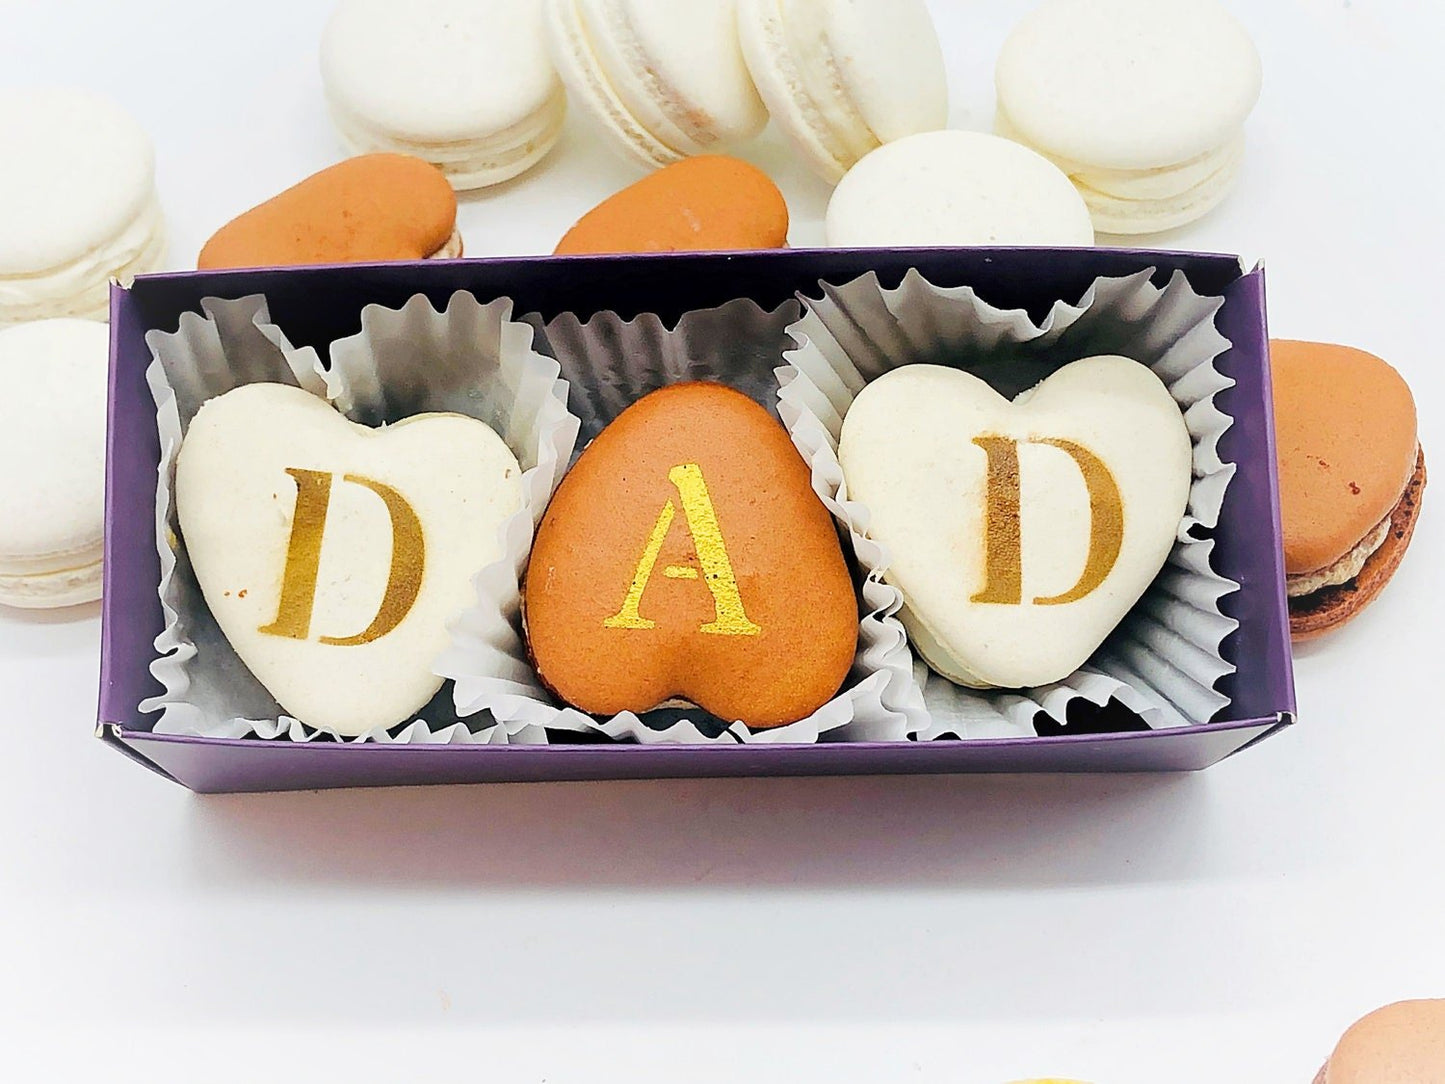 DAD Vegan Heart Macaron | Special gift for special dad! - Macaron CentraleStandard Shipping